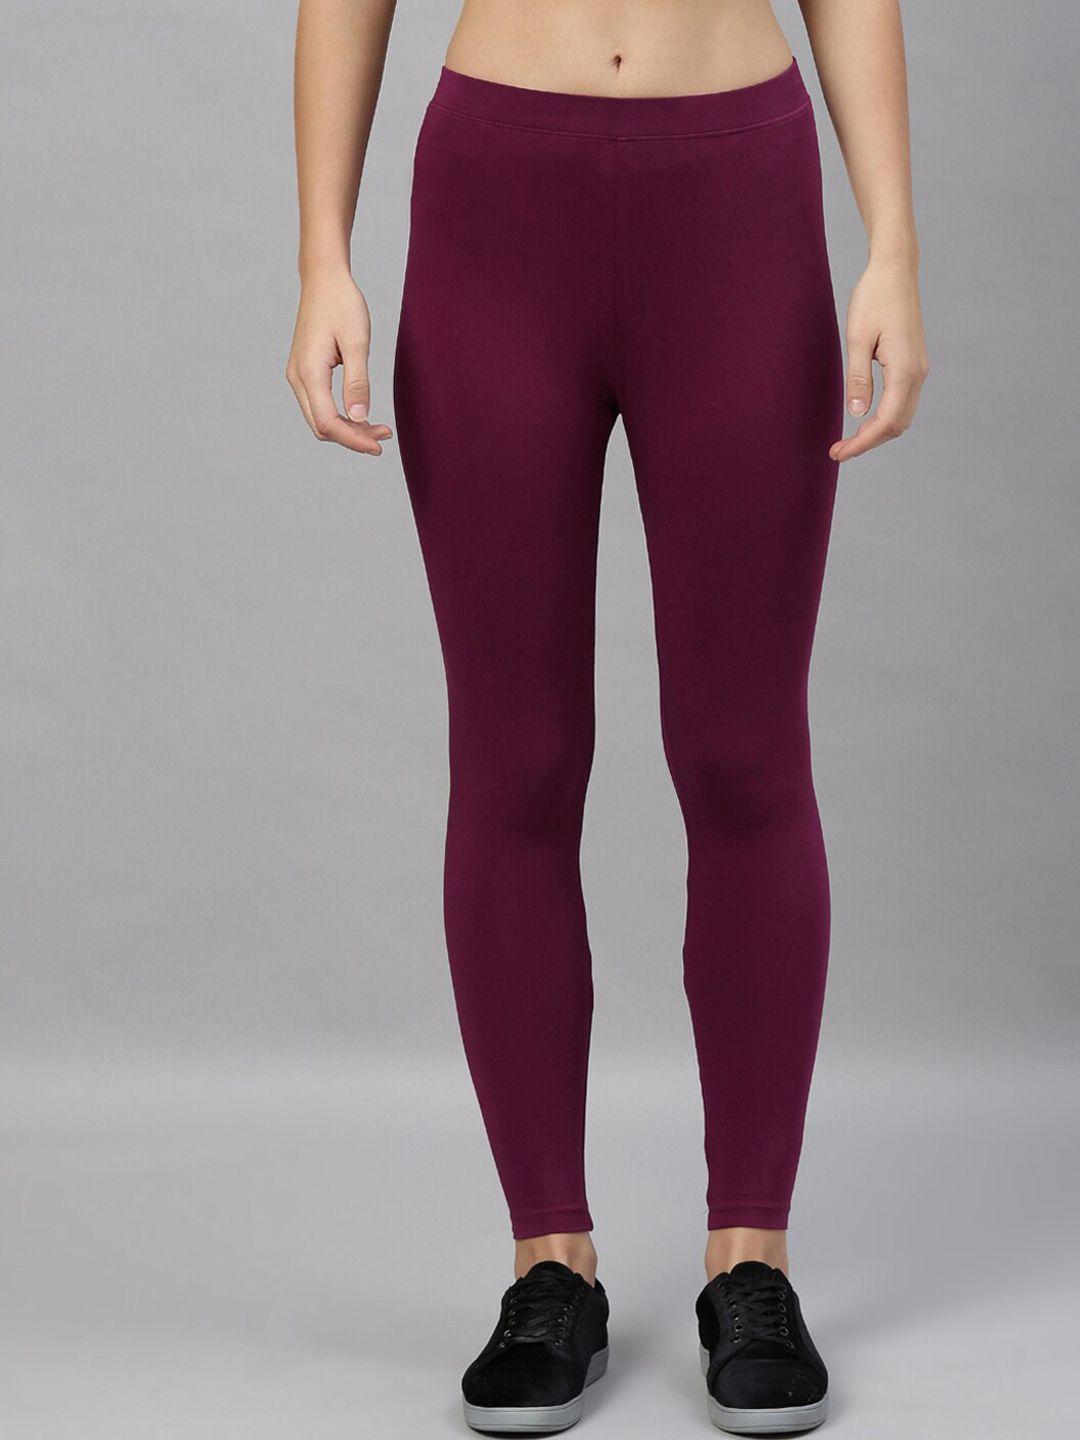 kryptic-women-burgundy-solid-ankle-length-leggings